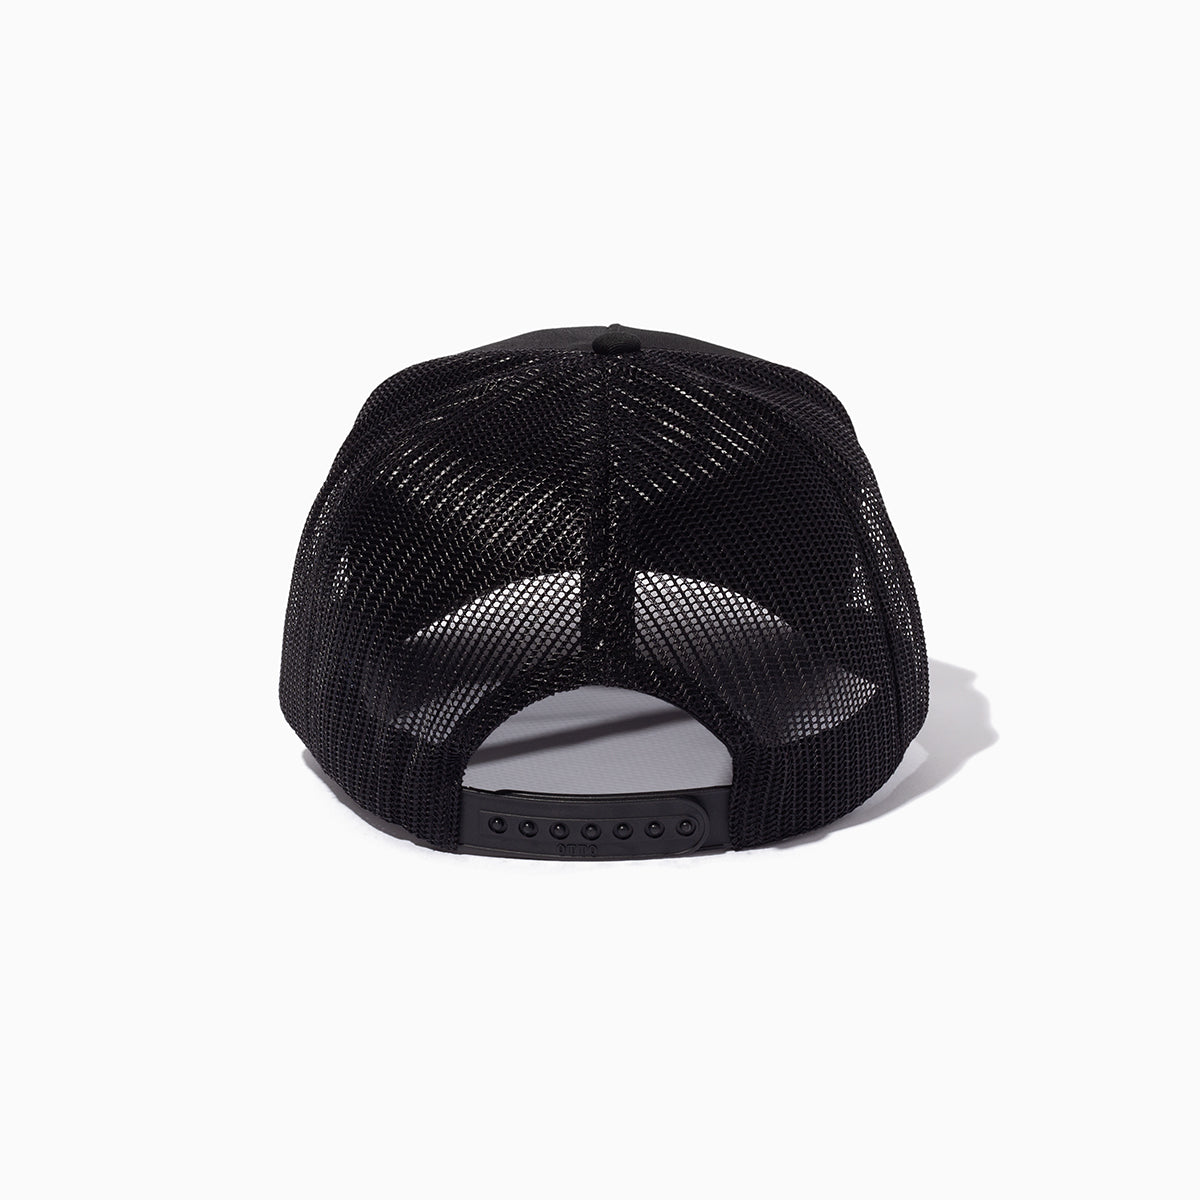 Black & Blue Essential Trucker Hat – namelessnyc